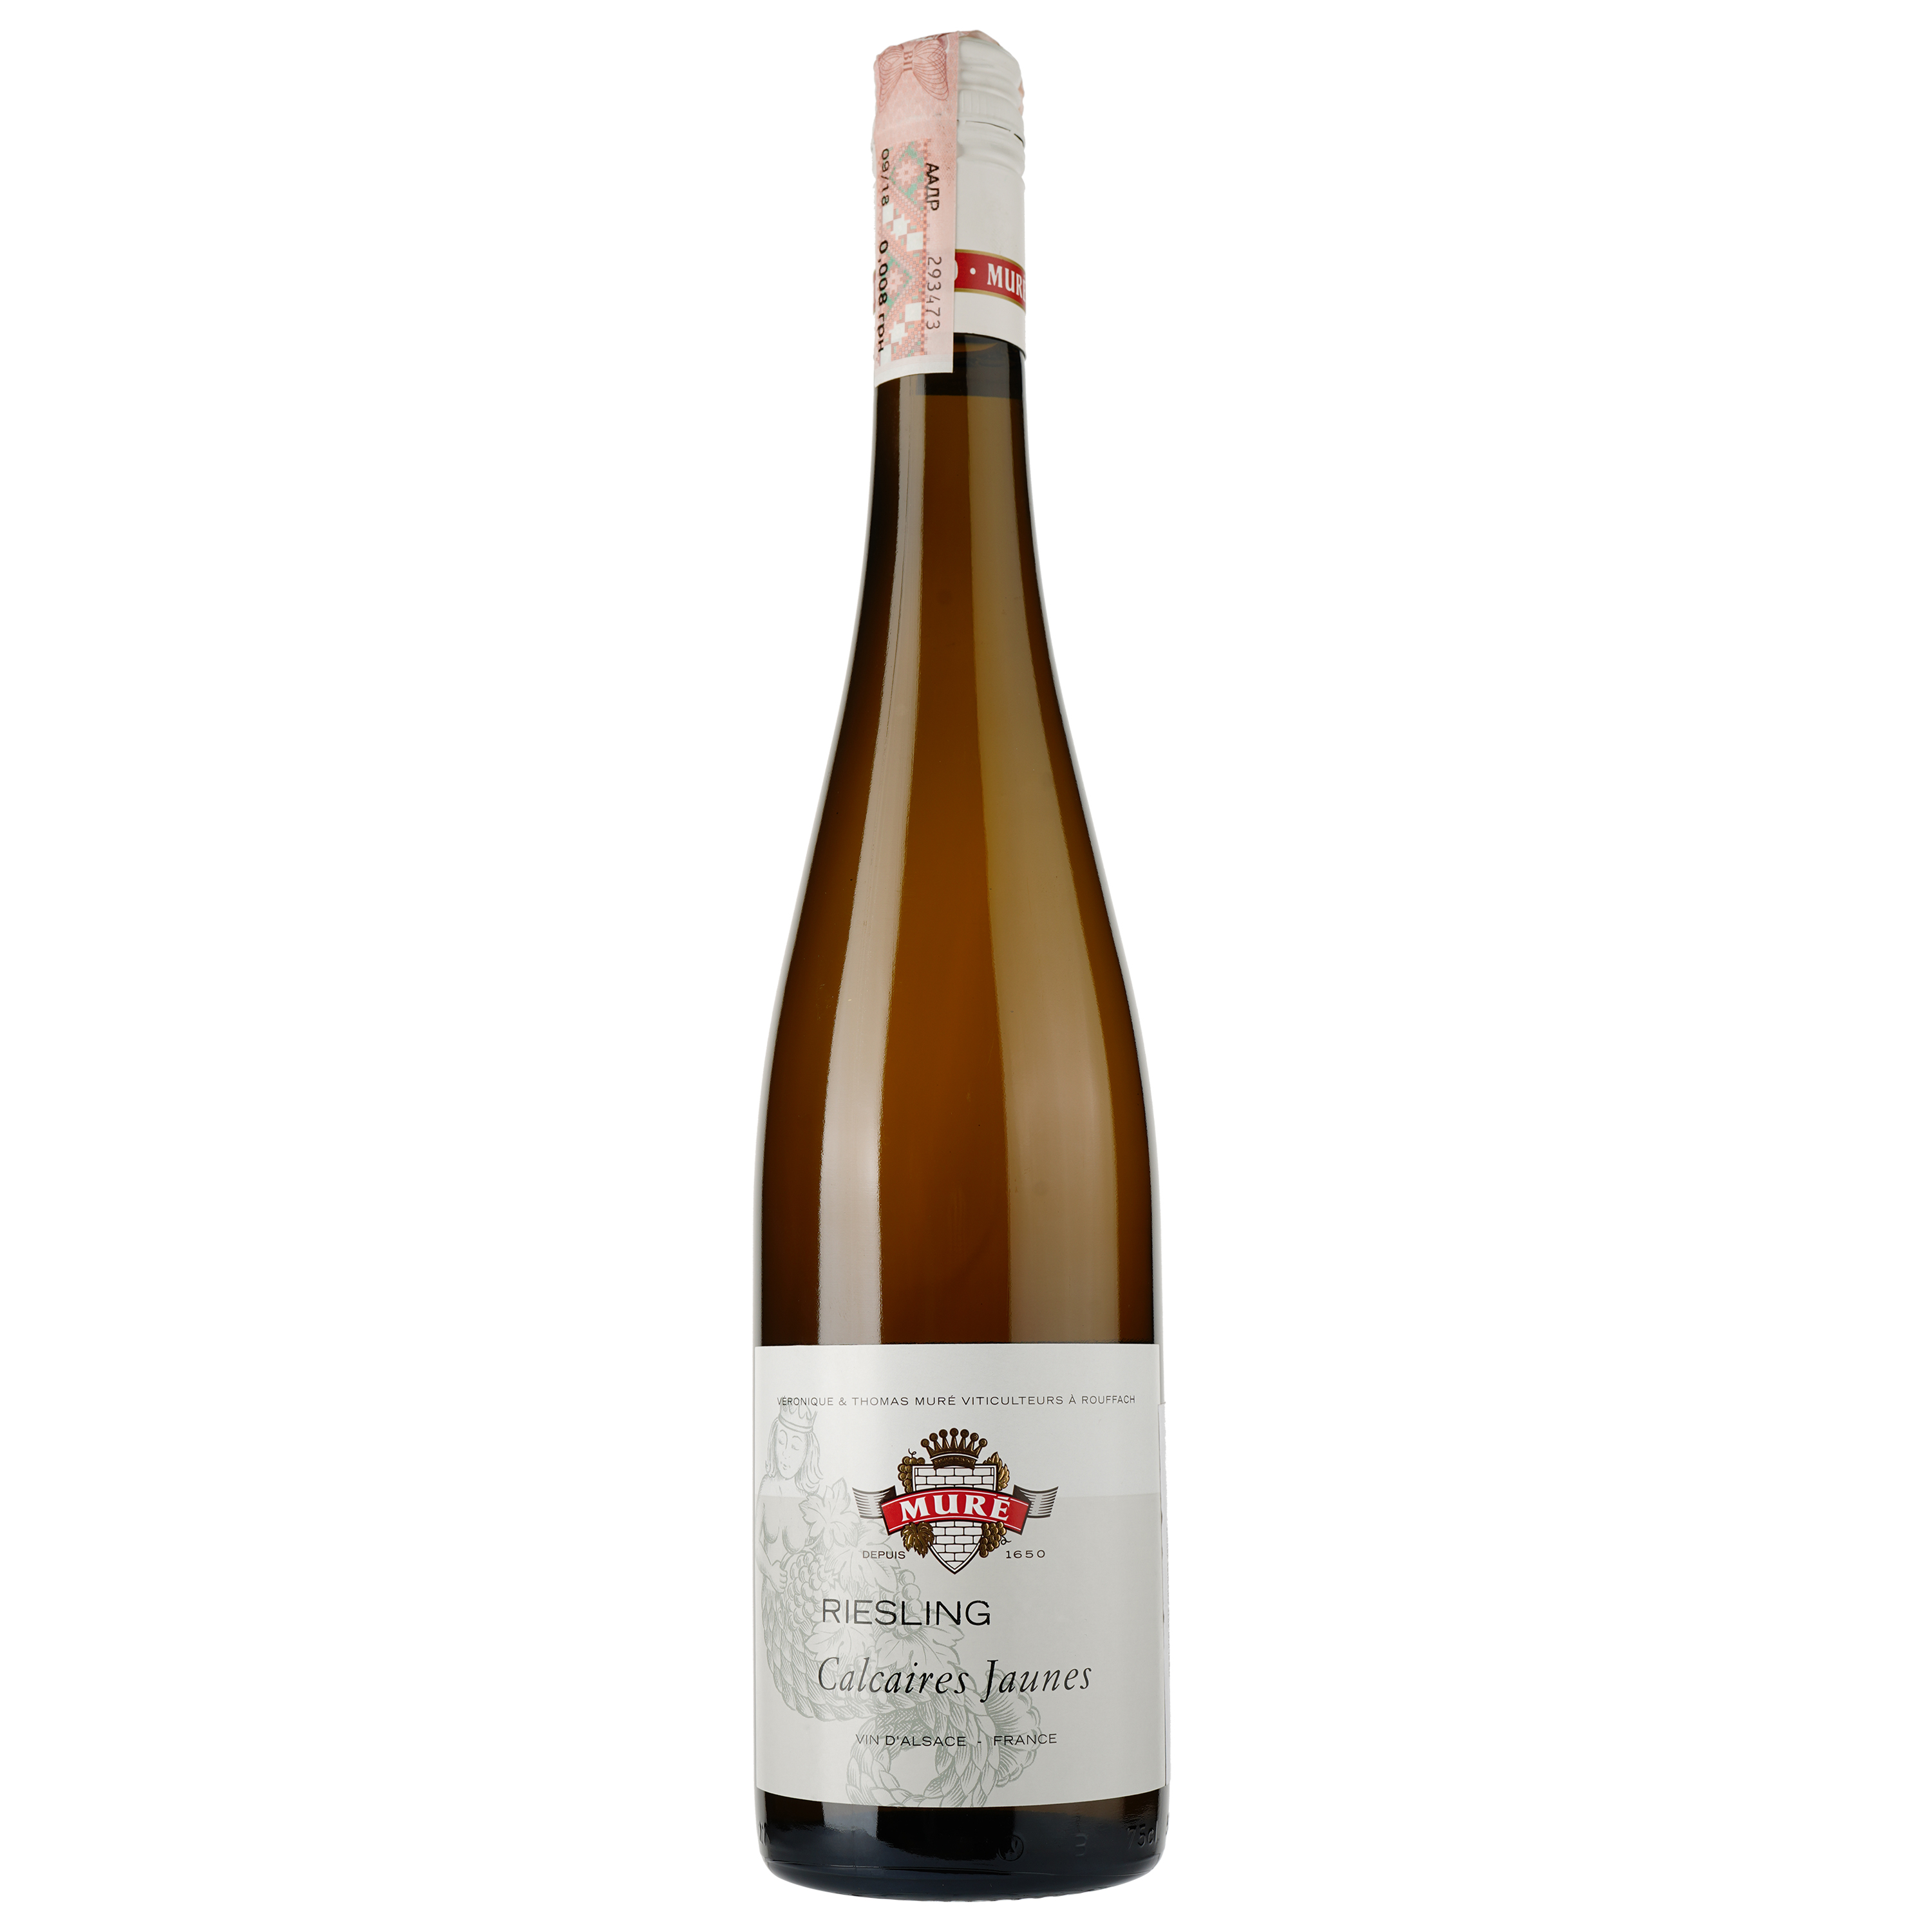 Вино Rene Mure Riesling Calcaires Jaunes 2016, біле, сухе, 0,75 л - фото 1